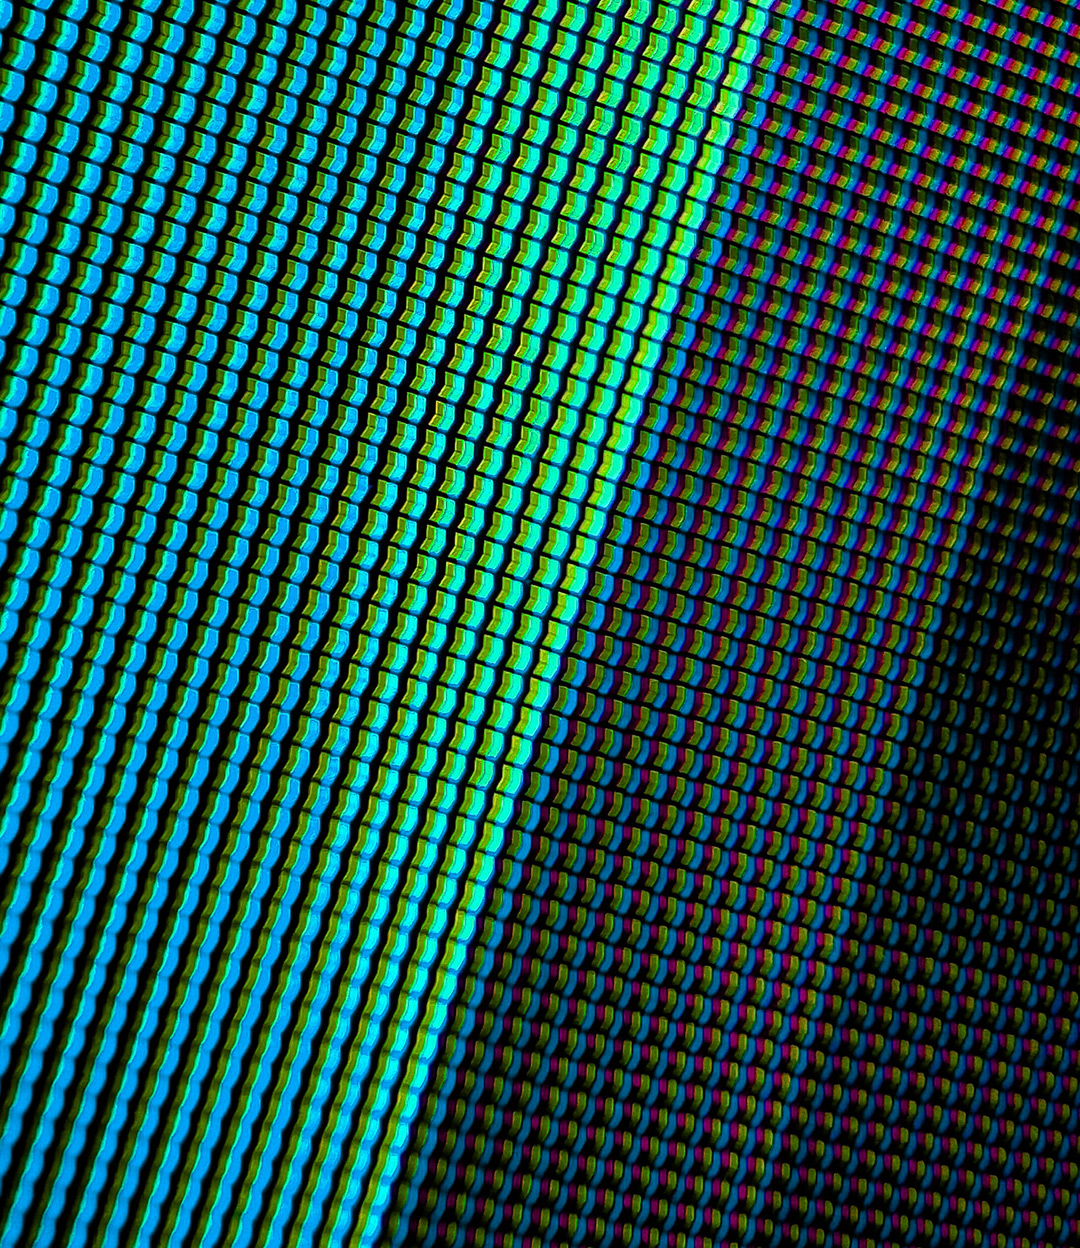 Close up image of screen pixels